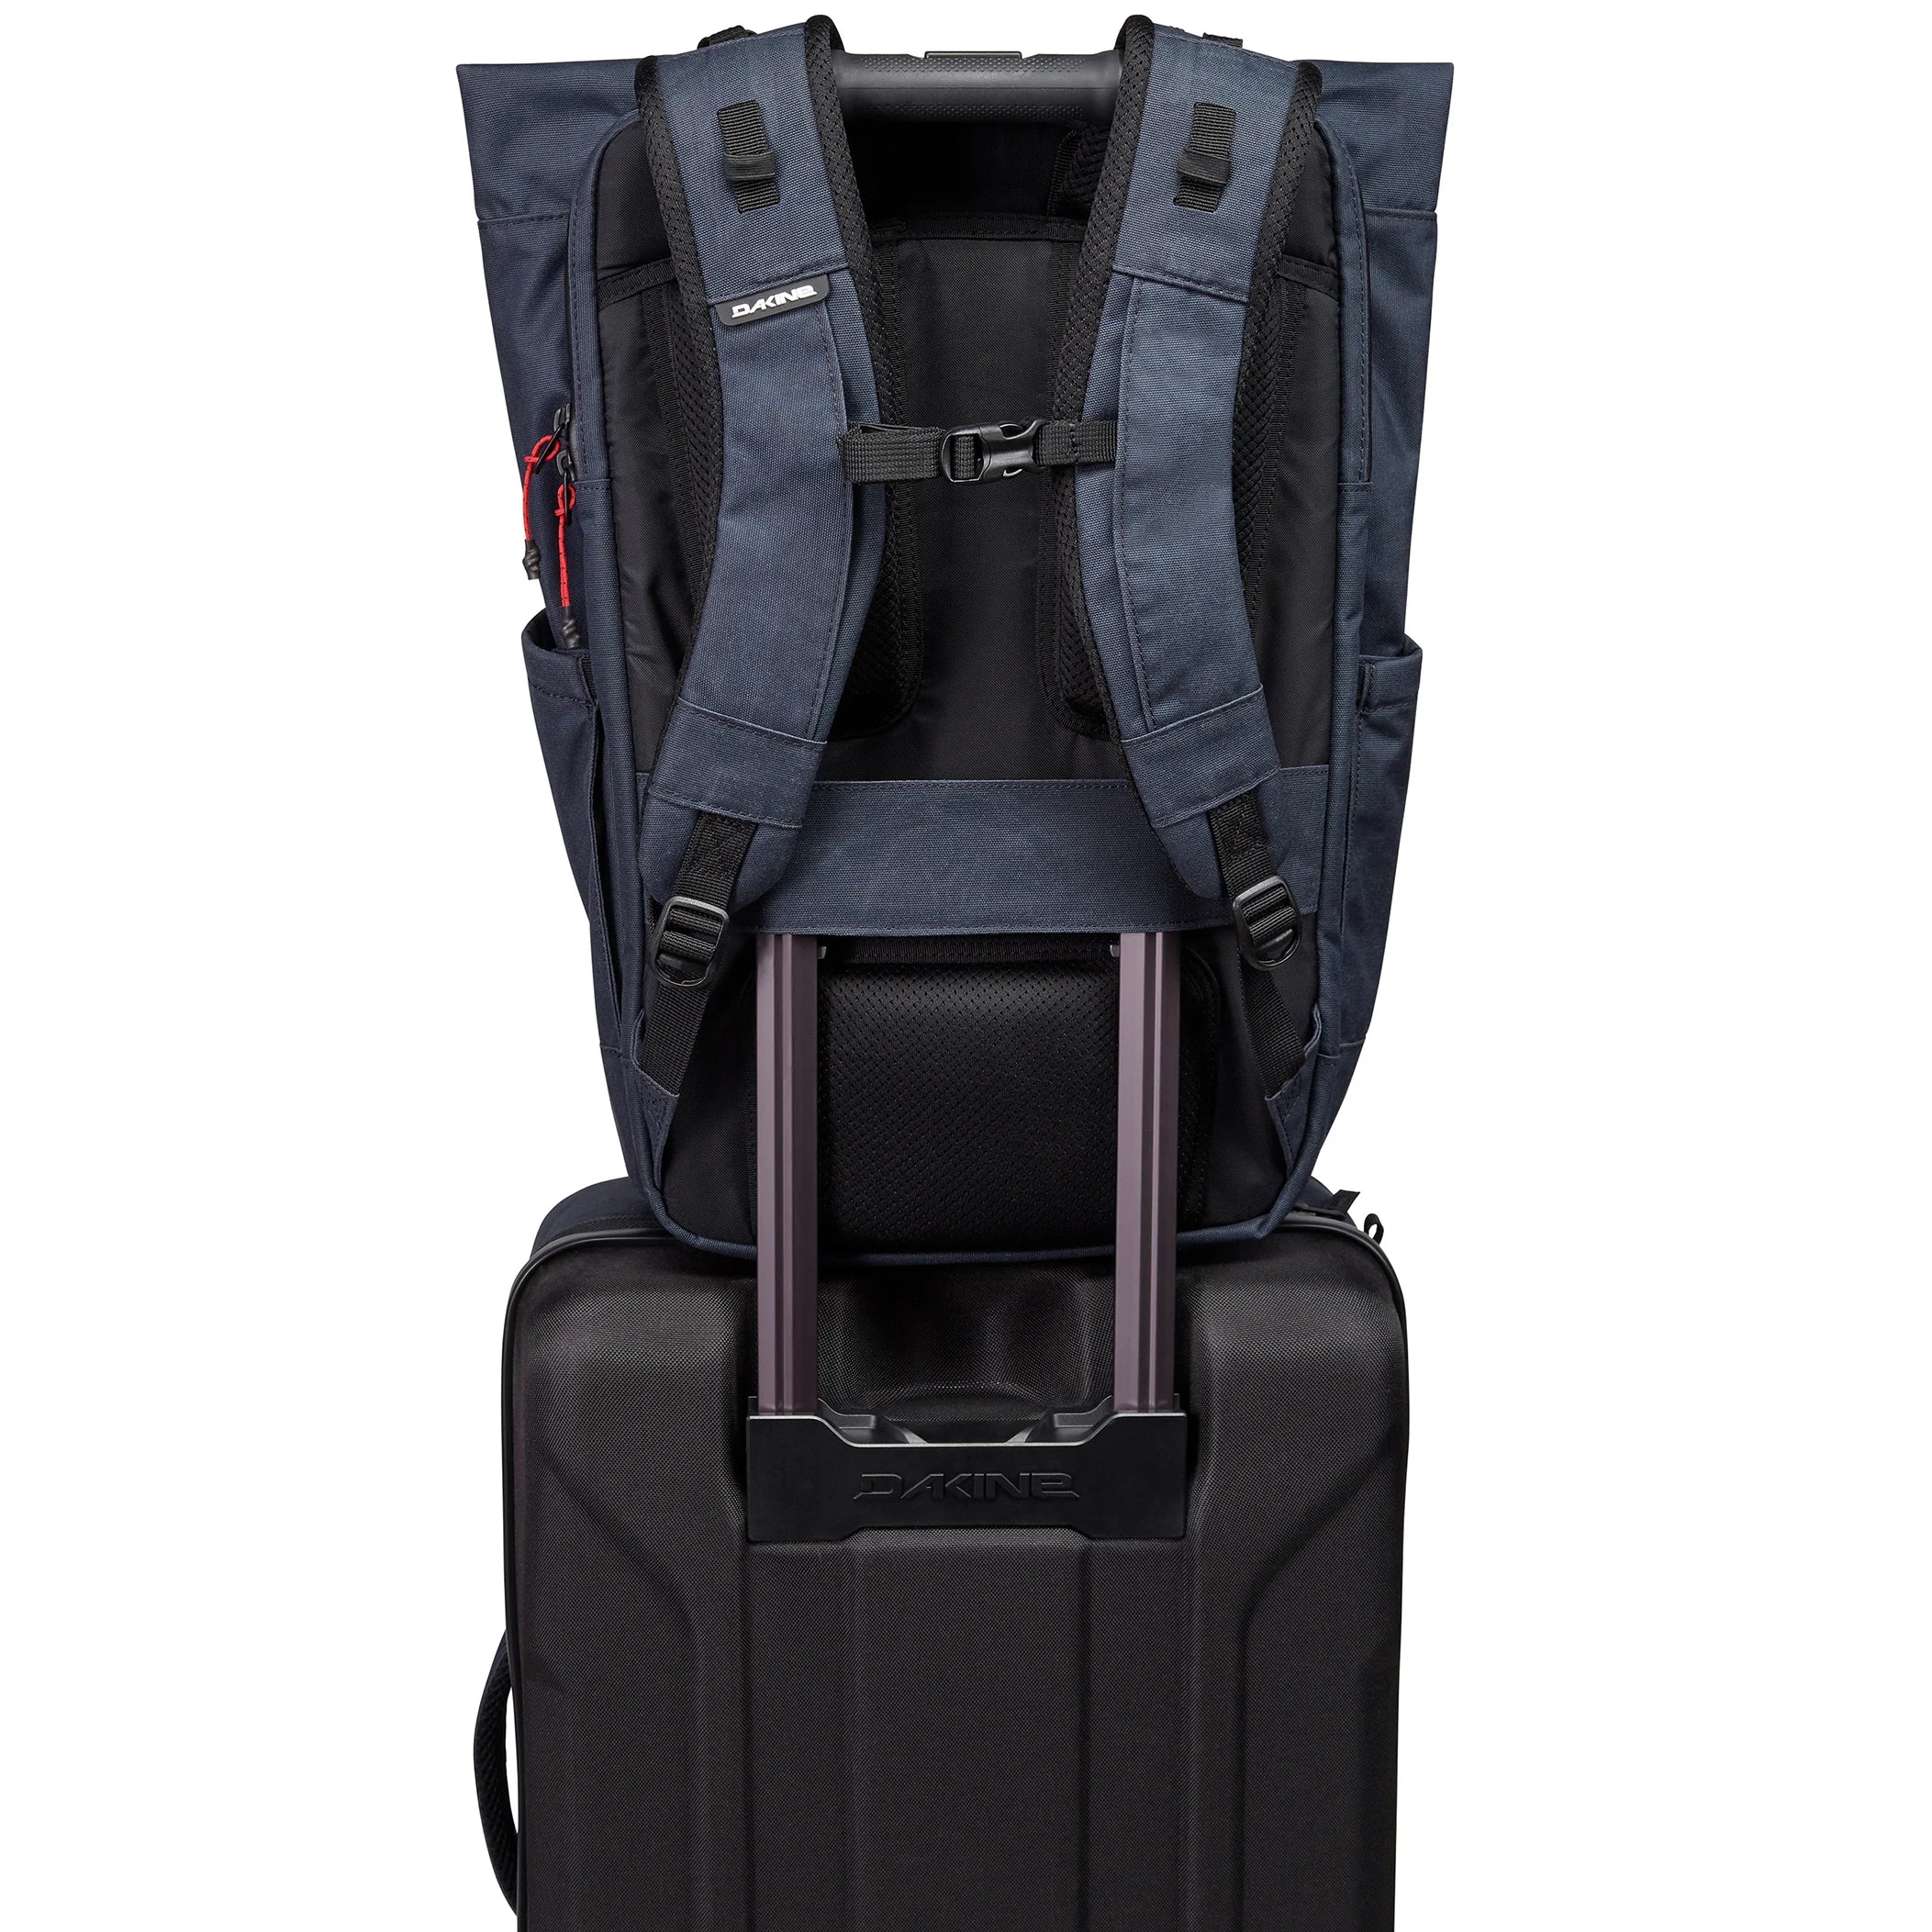 Dakine Packs &amp; Bags Infinity Pack 21L Sac à dos 46 cm - port rouge